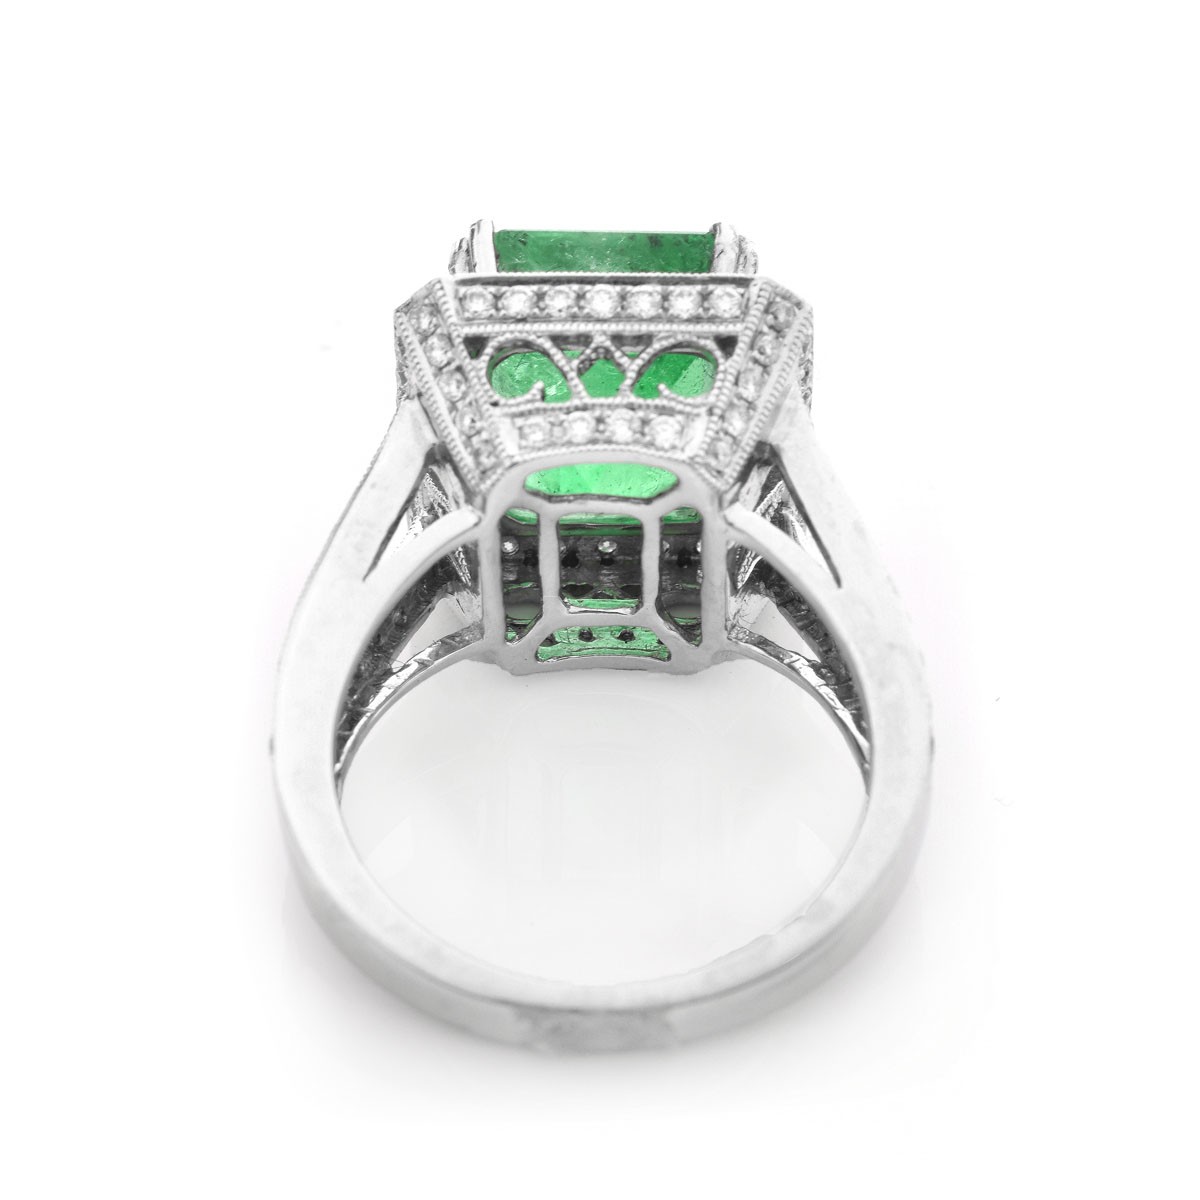 Approx. 6.35 Carat Colombian Emerald, 1.75 Carat Round Brilliant Cut Diamond and 18 Karat White Gold Ring.